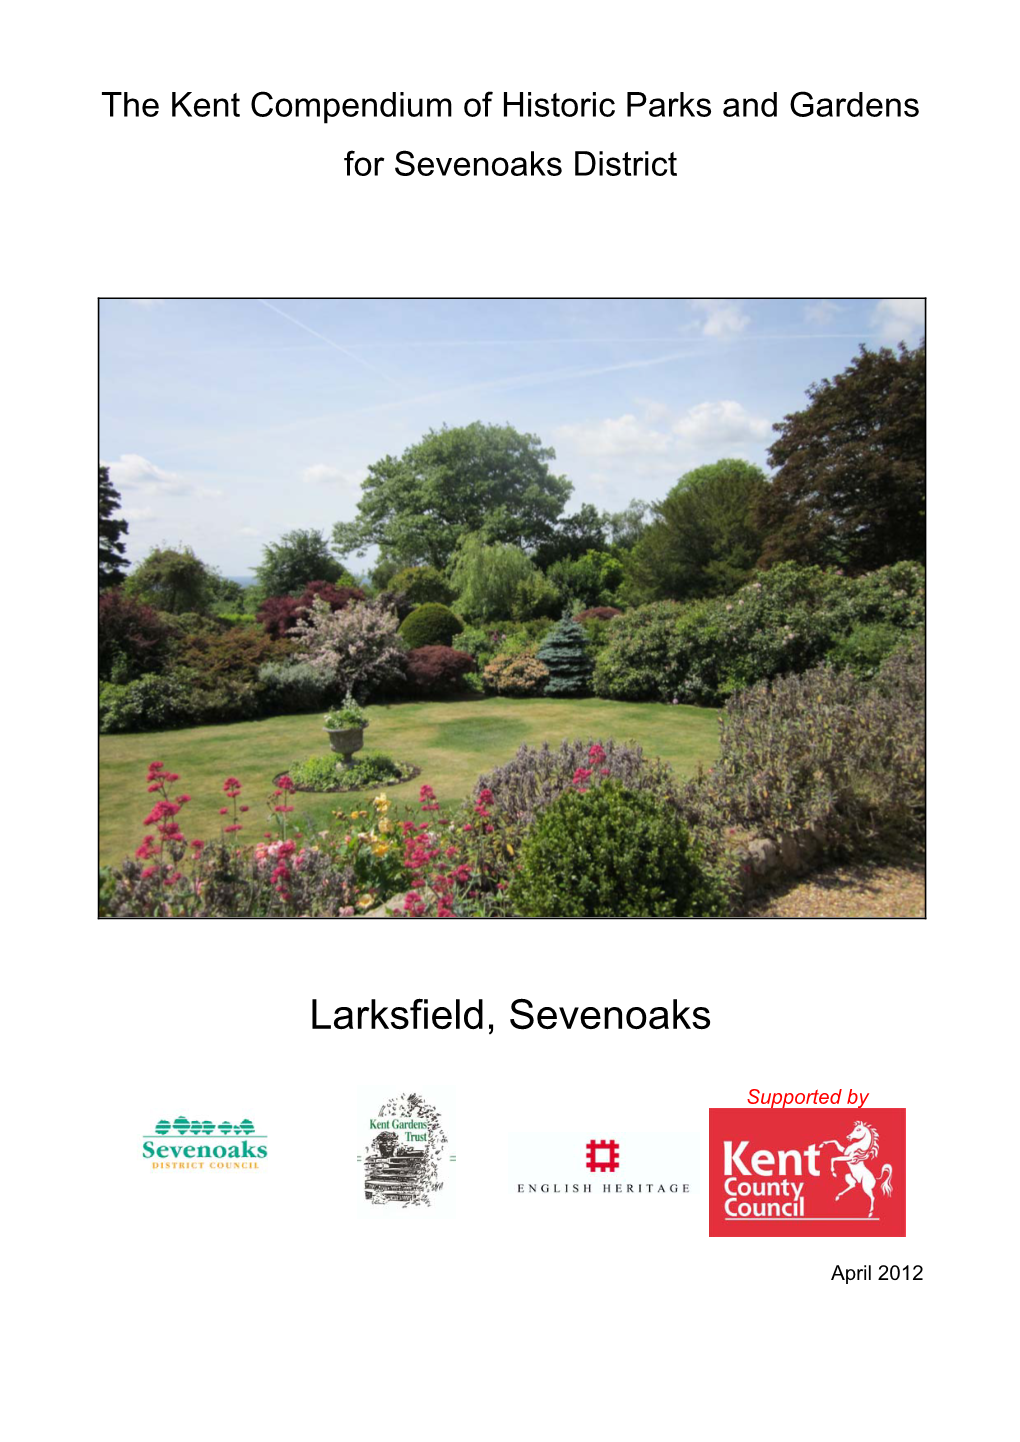 Larksfield, Sevenoaks